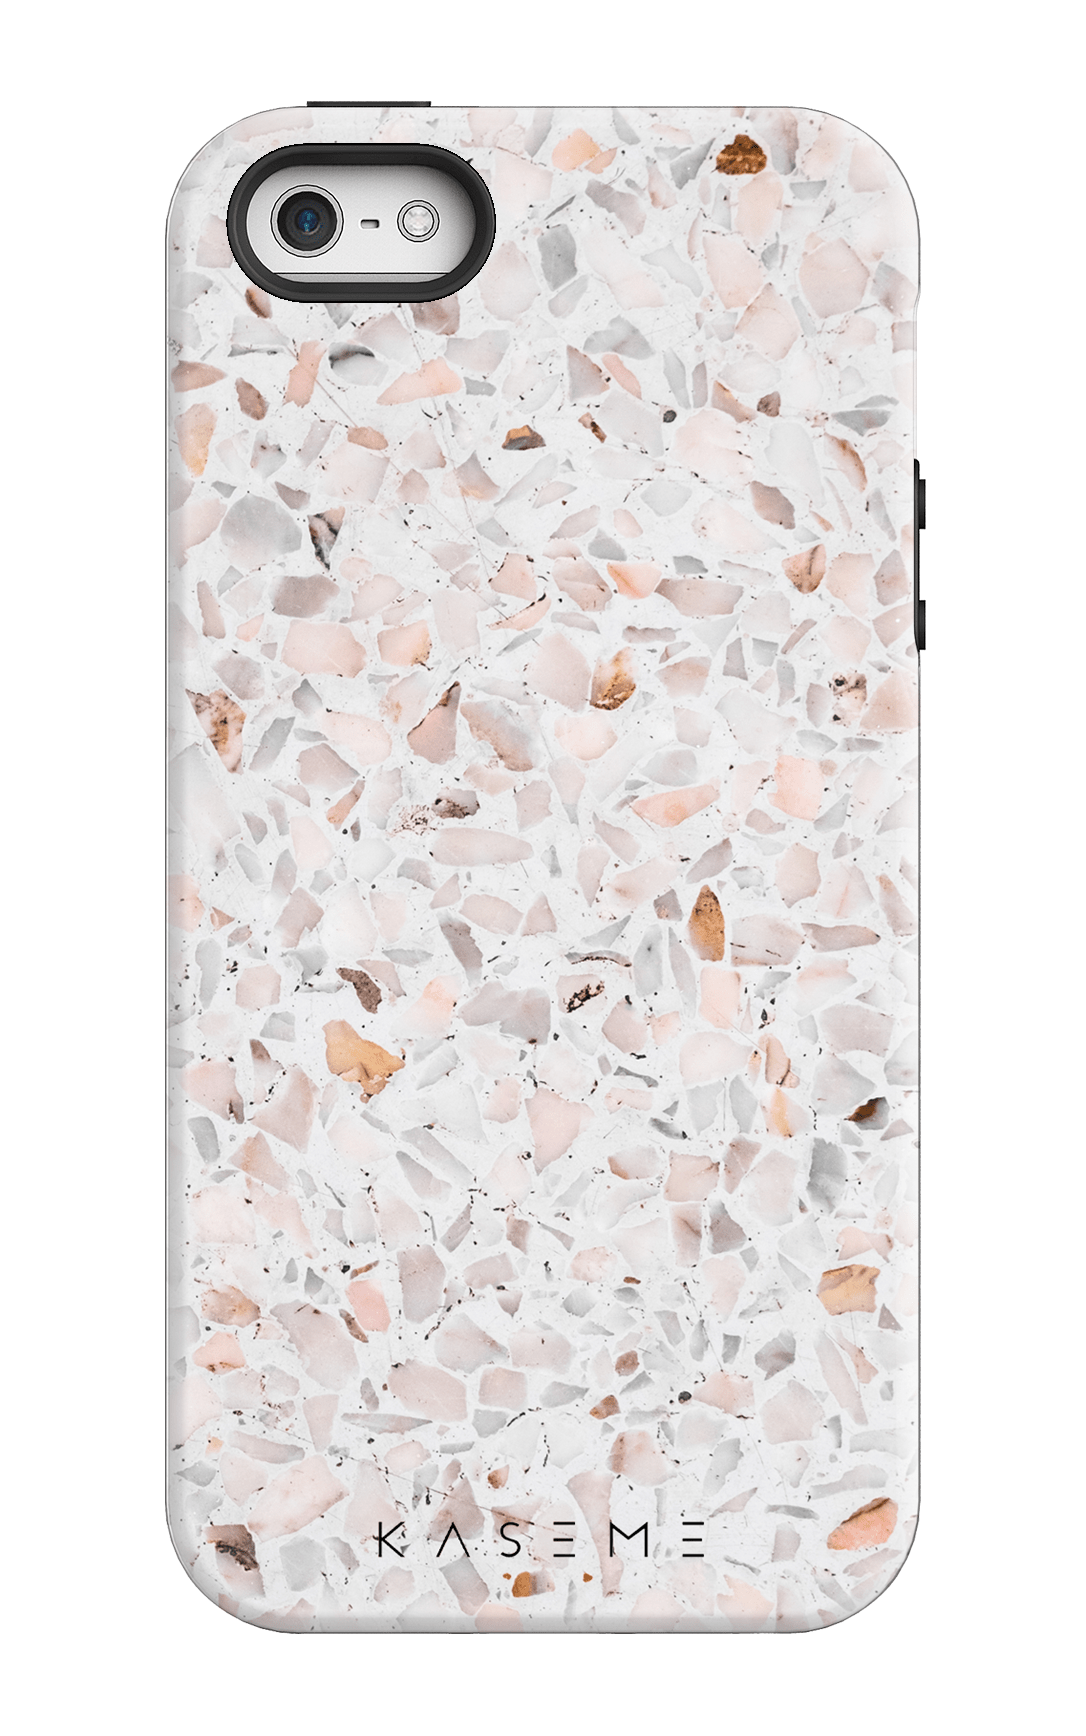 Frozen stone - iPhone 5/5S/SE